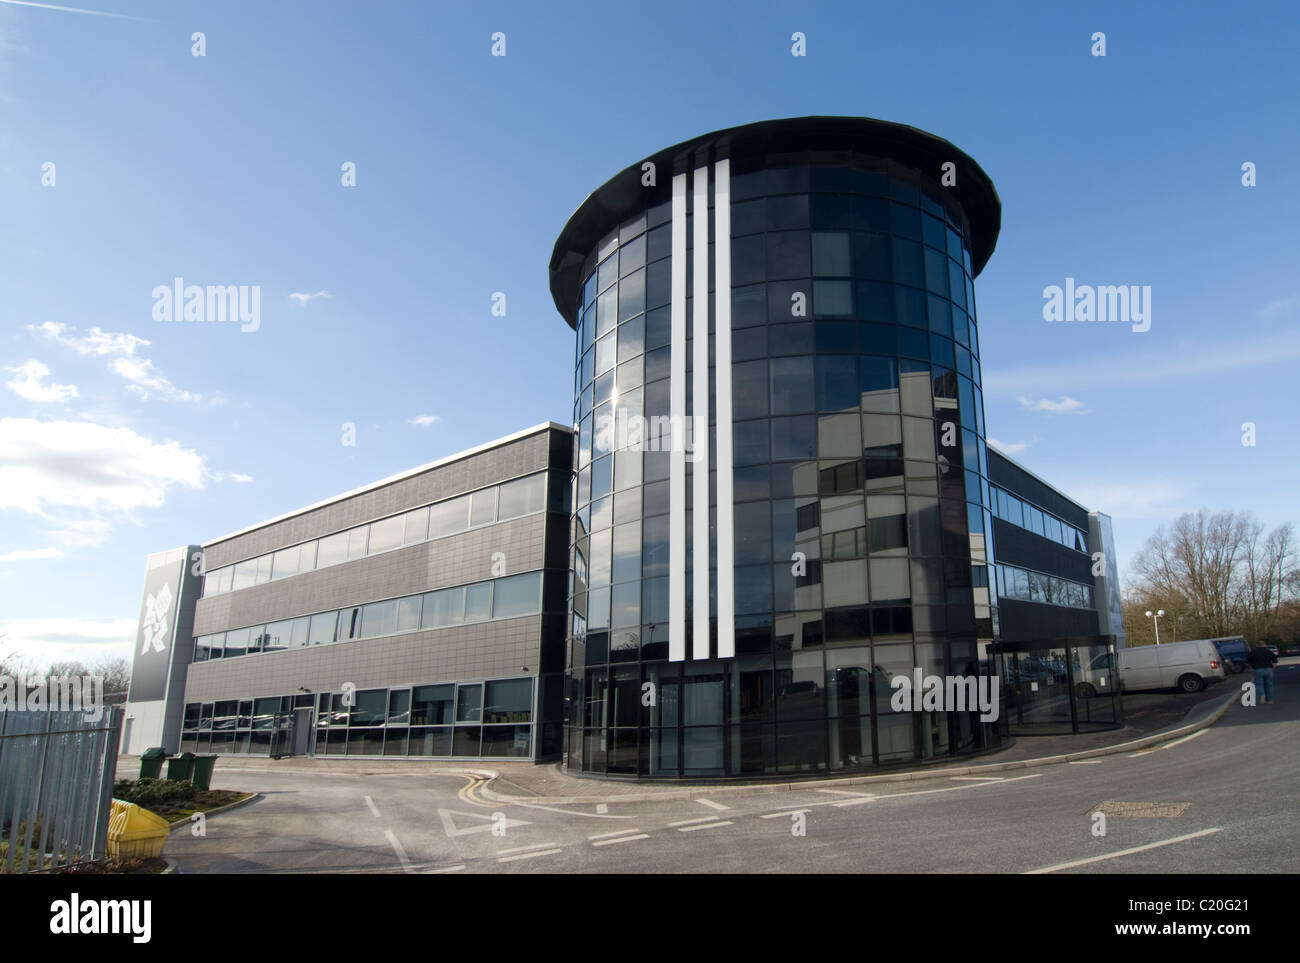 tarta Siesta Son Adidas headquarters fotografías e imágenes de alta resolución - Alamy